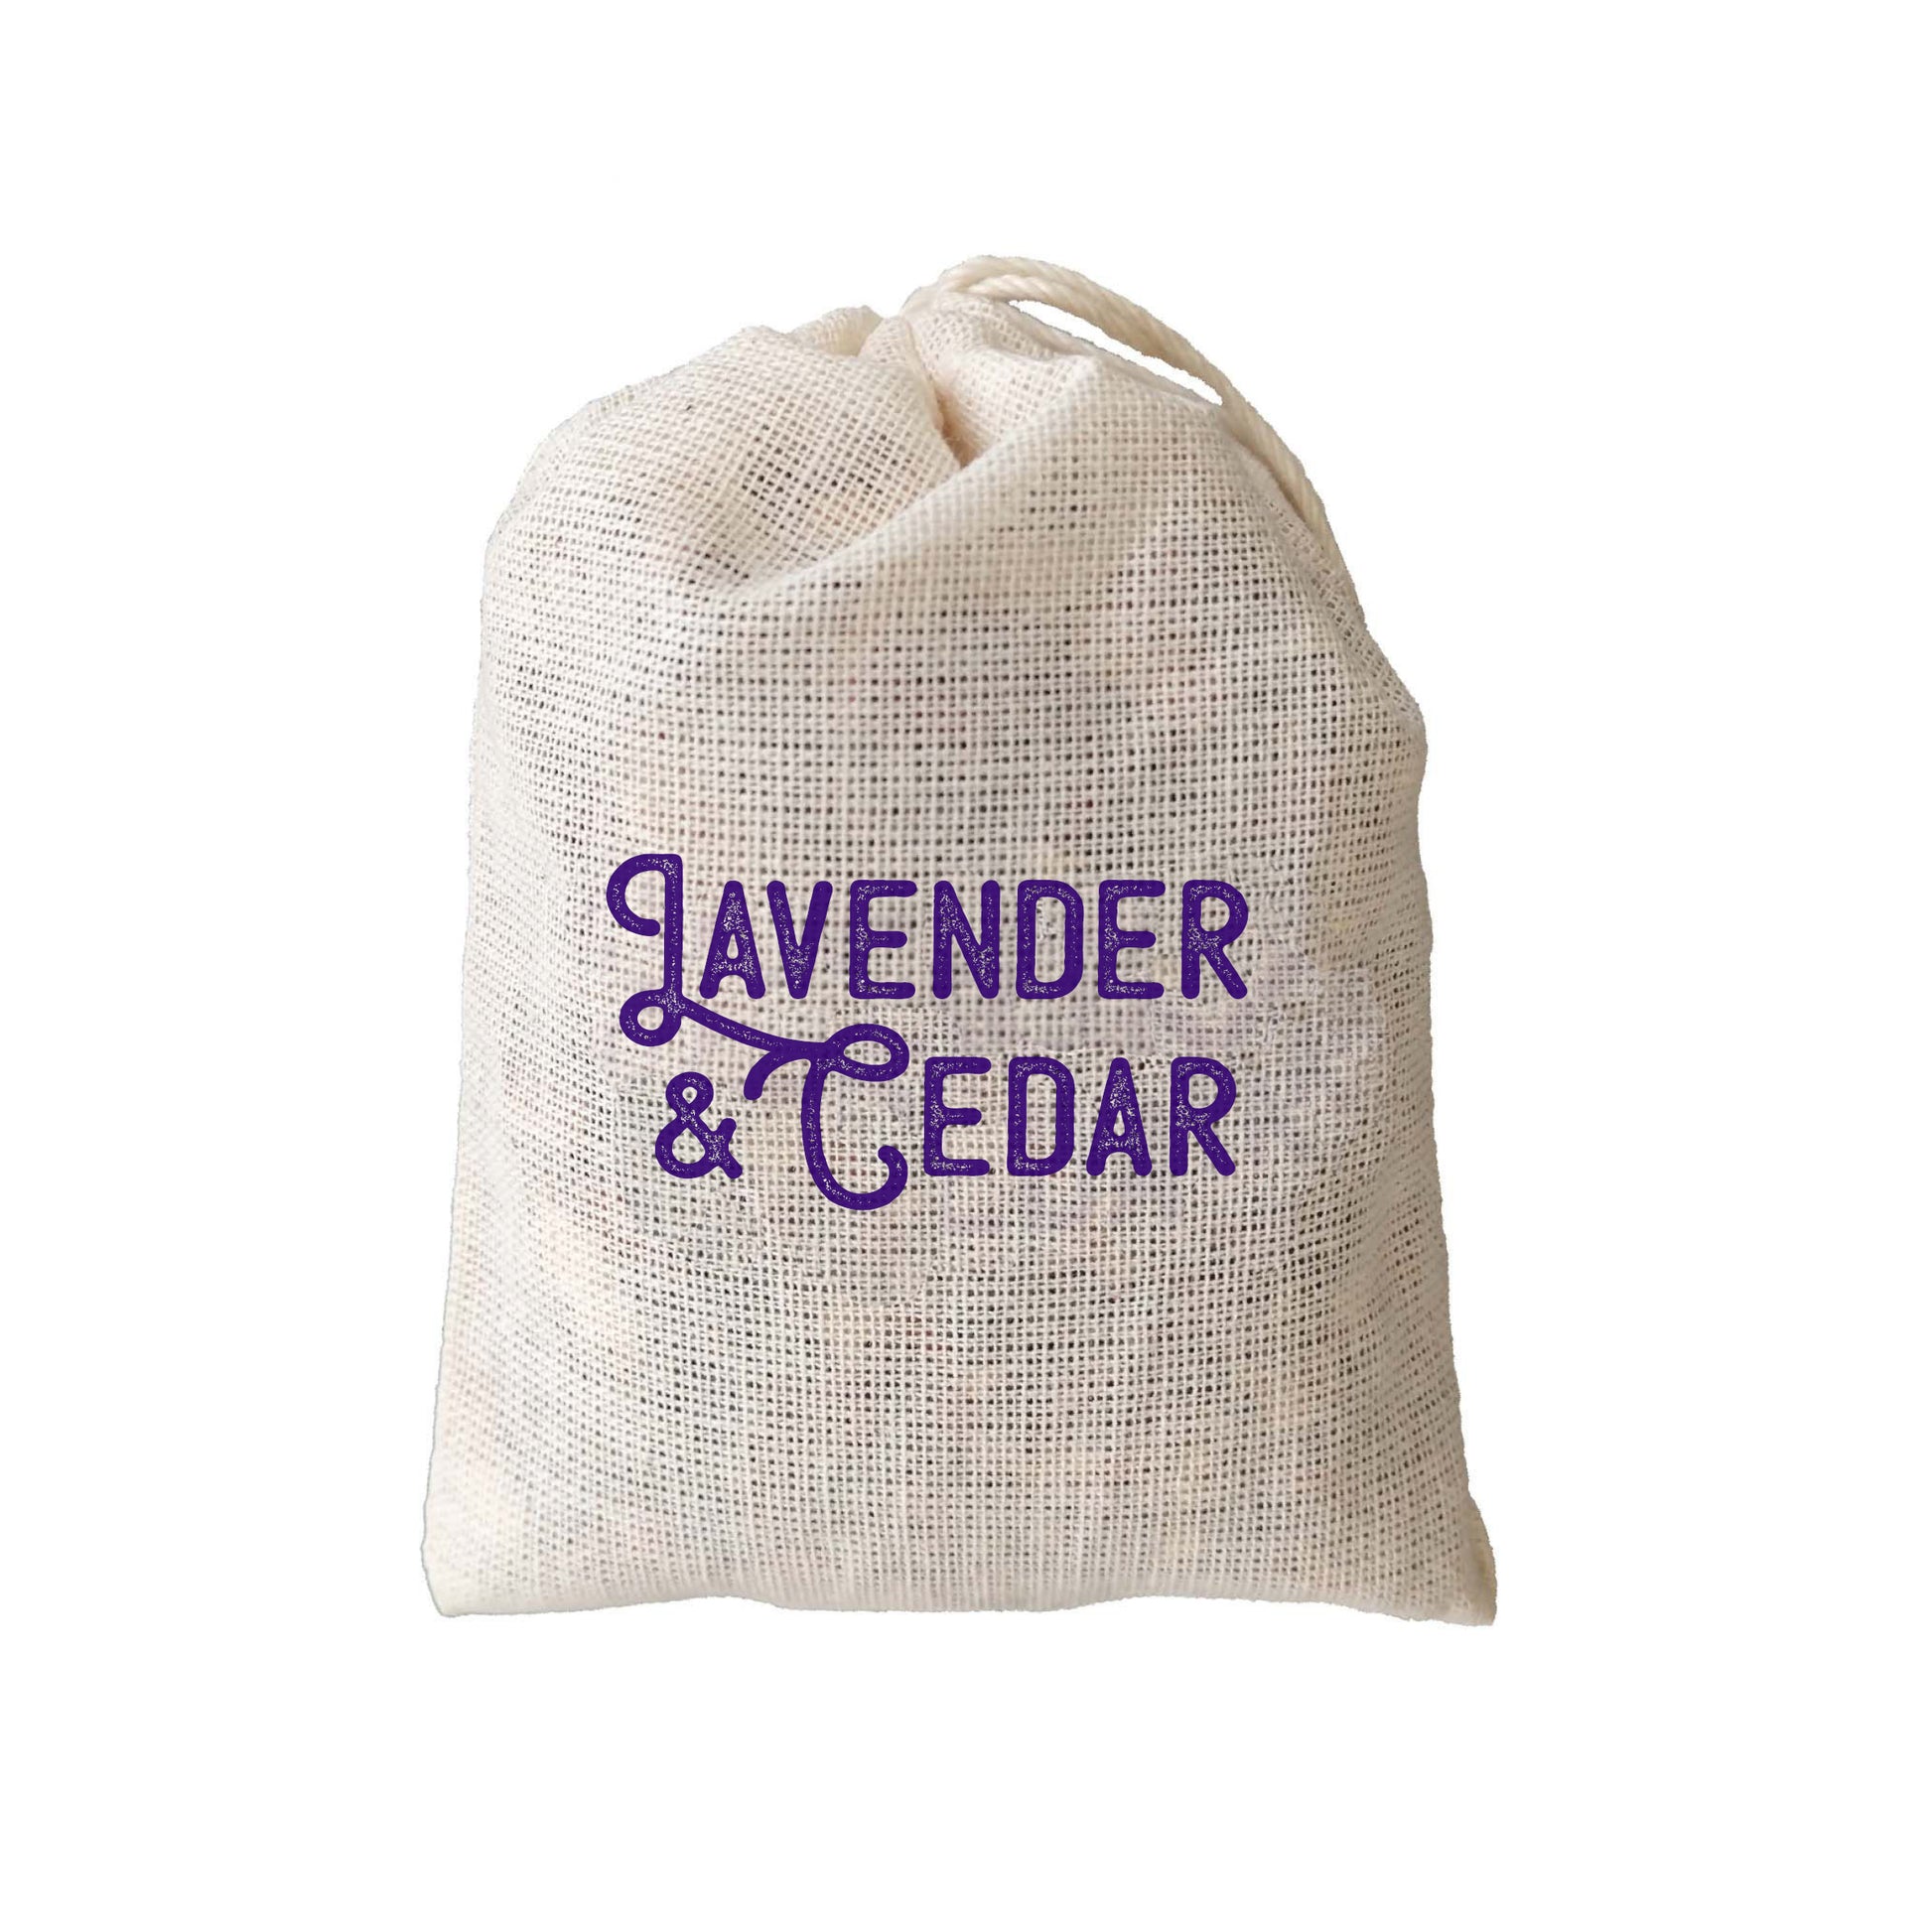 Lavender Sachet Bags - Moth Repellent Sachets (10 Pack) Home